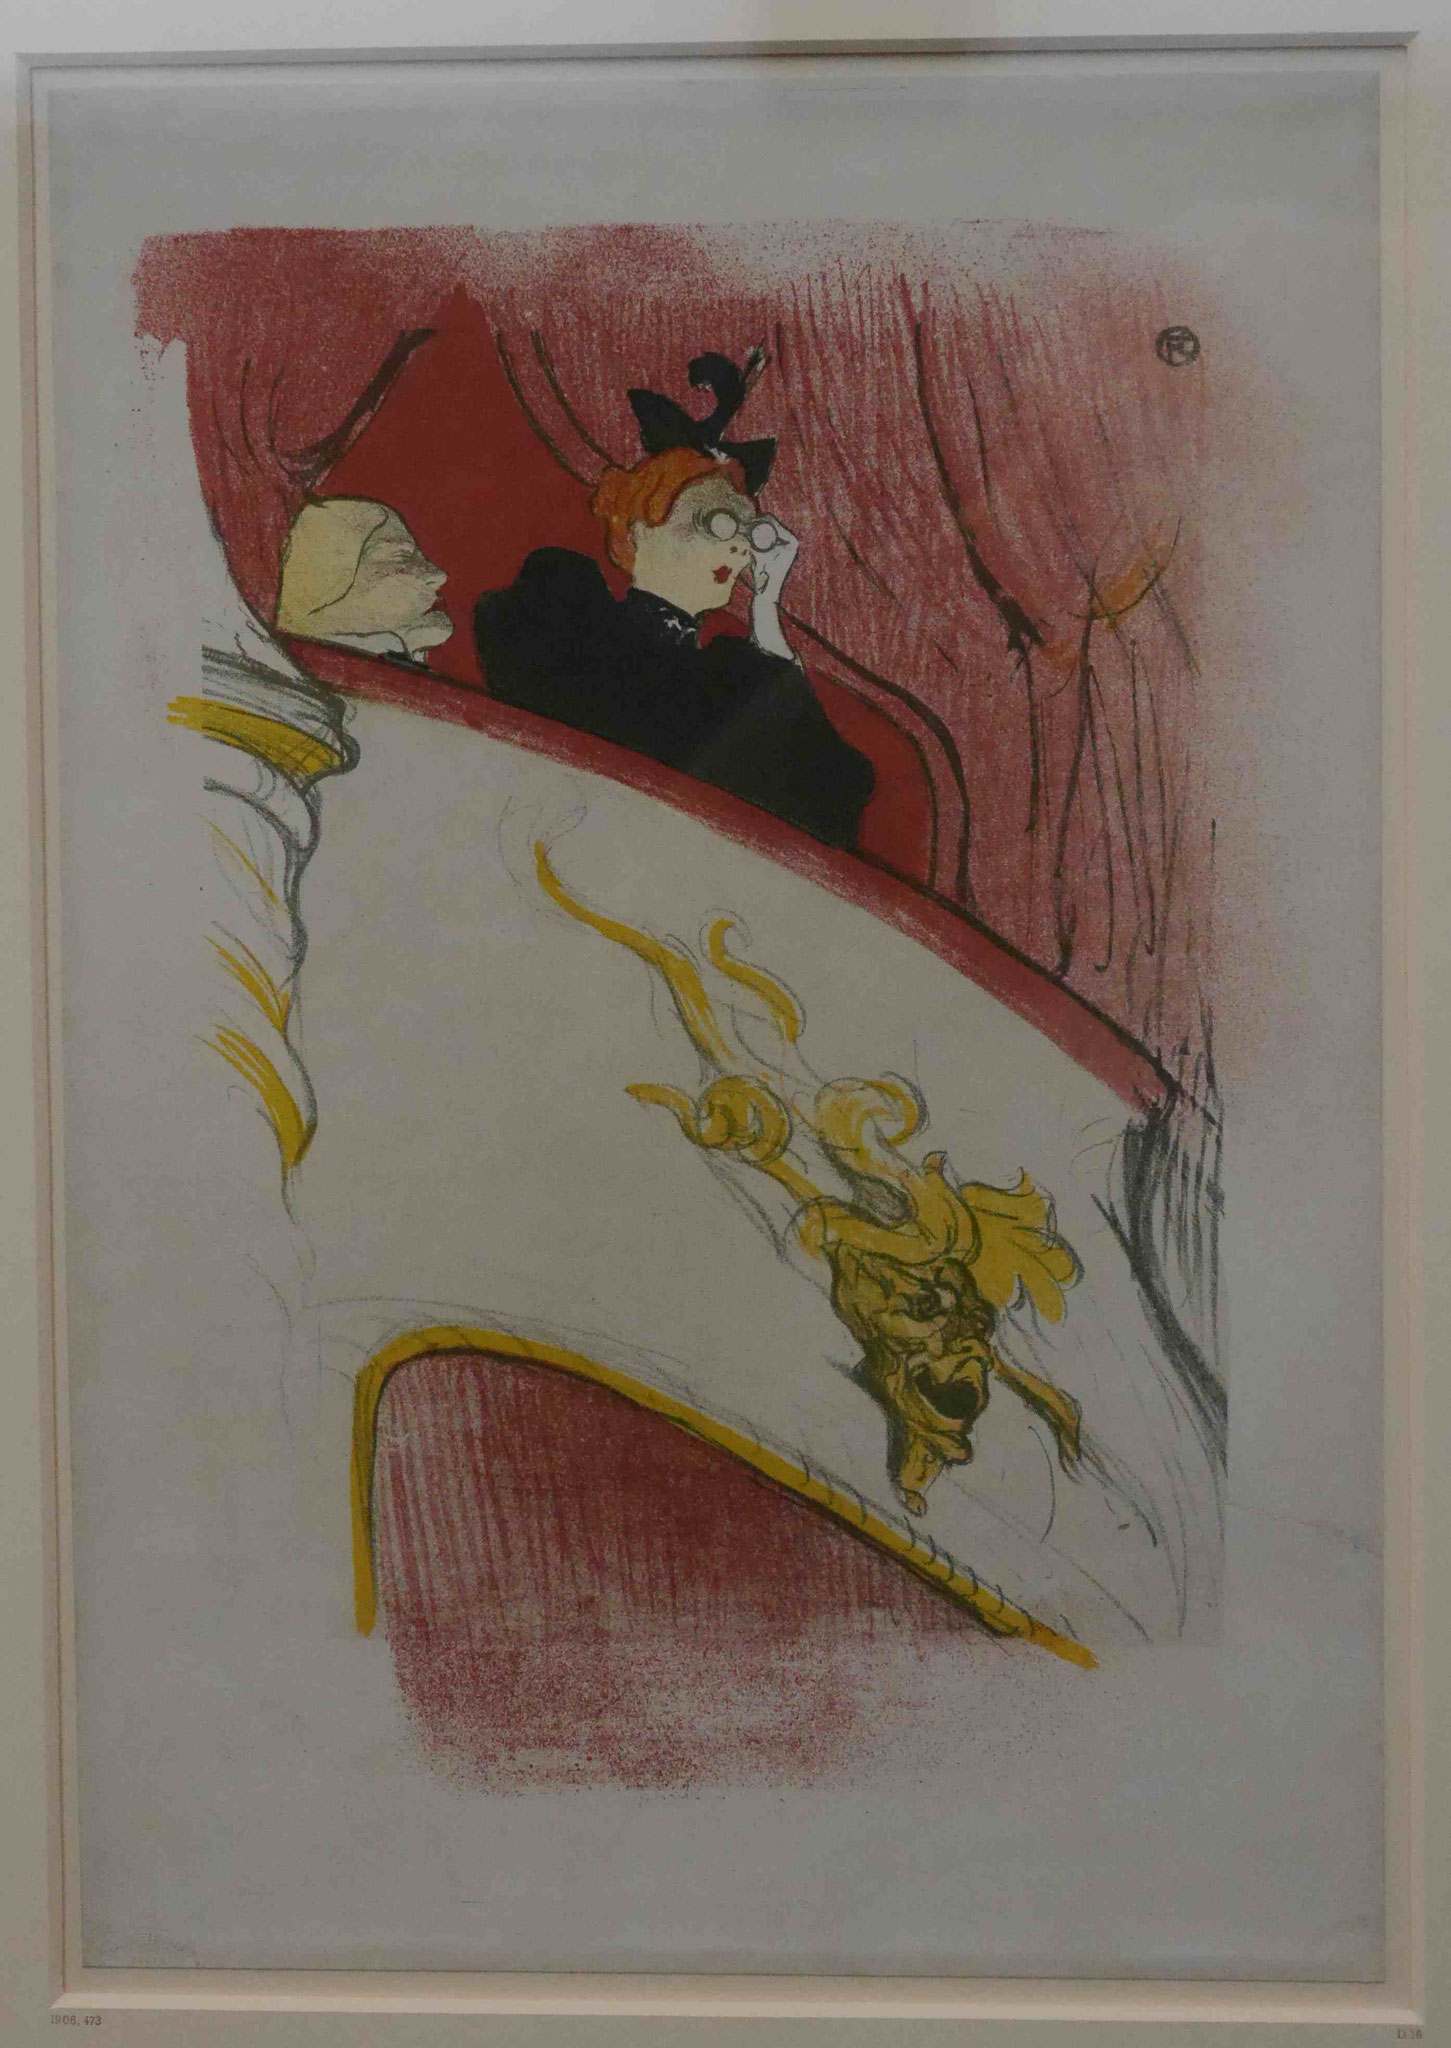 Henri de Toulouse-Lautrec, ImEx, Kunstbilbliothek Berlin